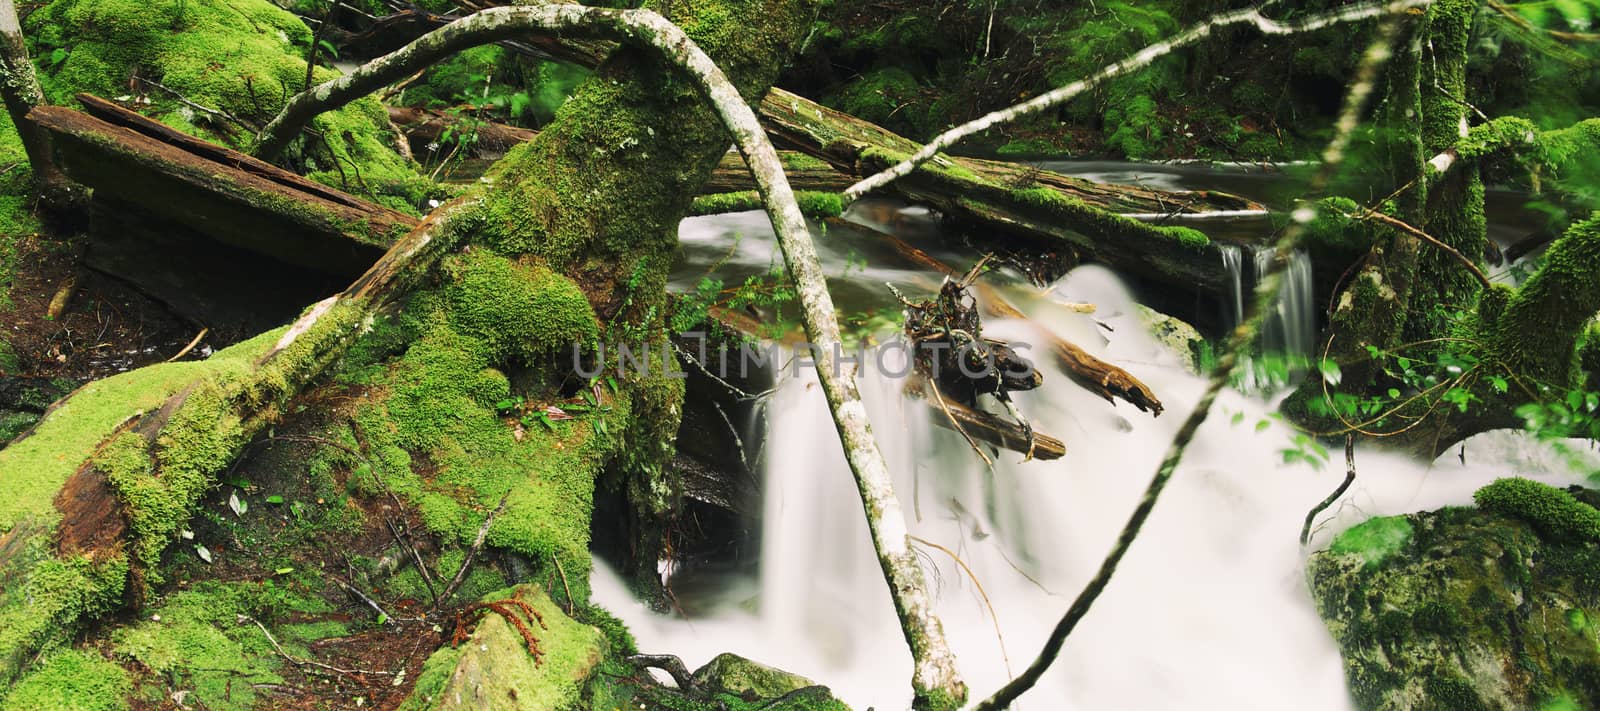 Knyvet Falls in Cradle Mountain by artistrobd